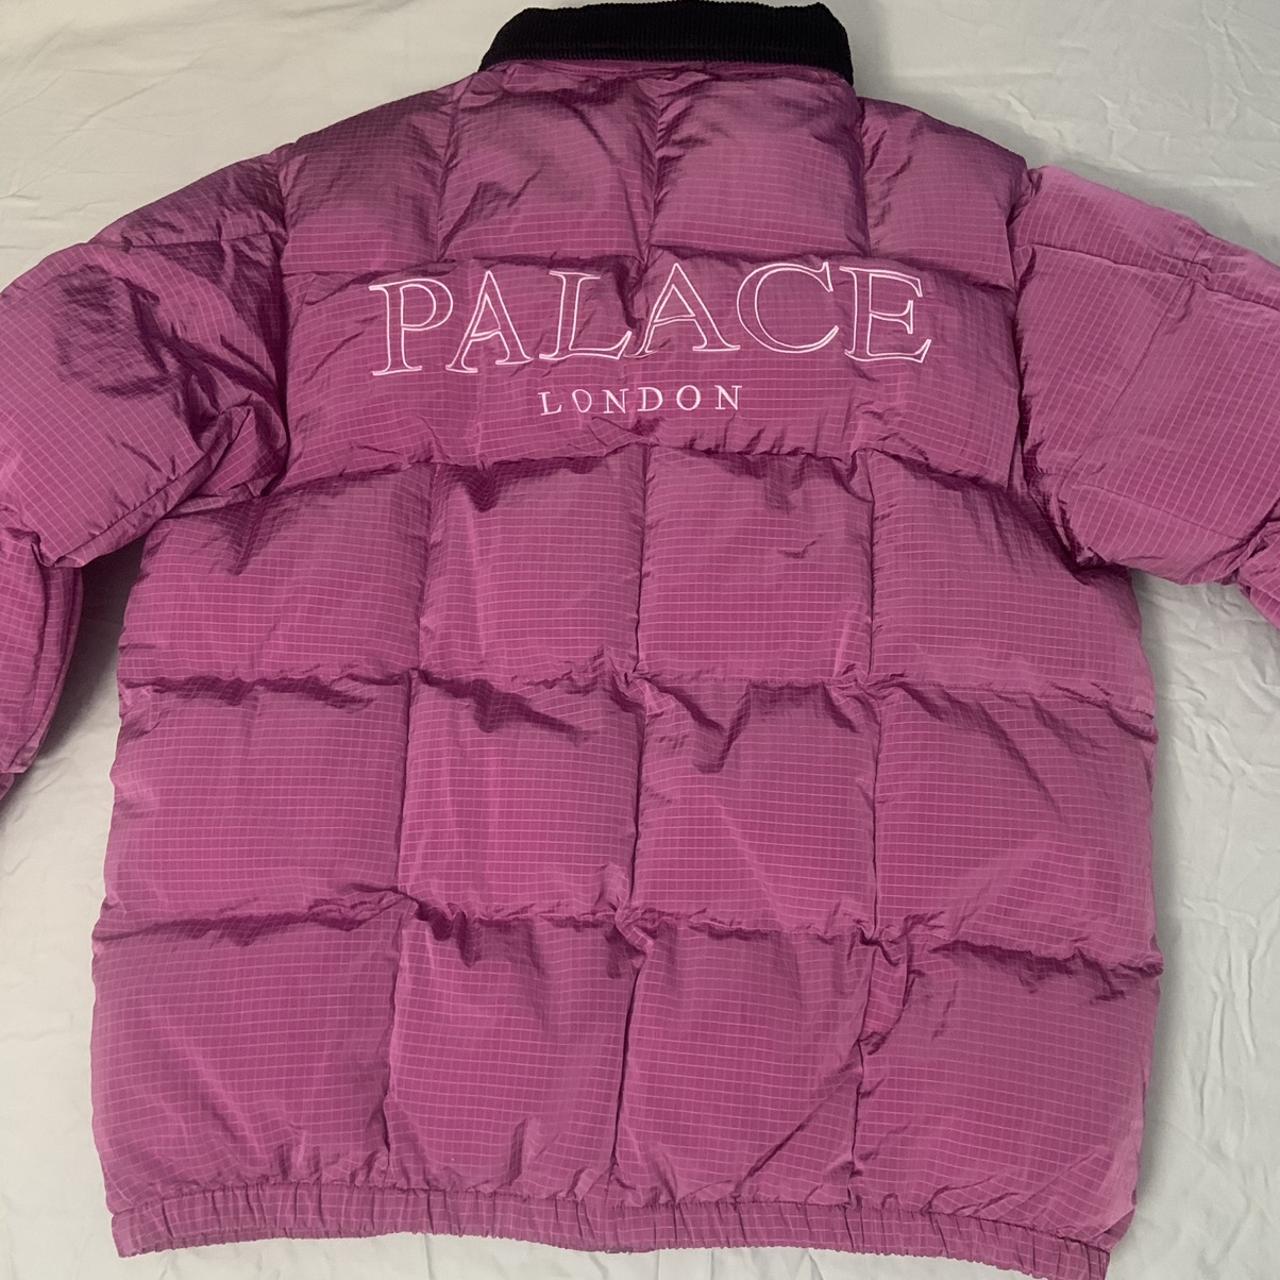 Palace Men's Pink and Purple Jacket | Depop